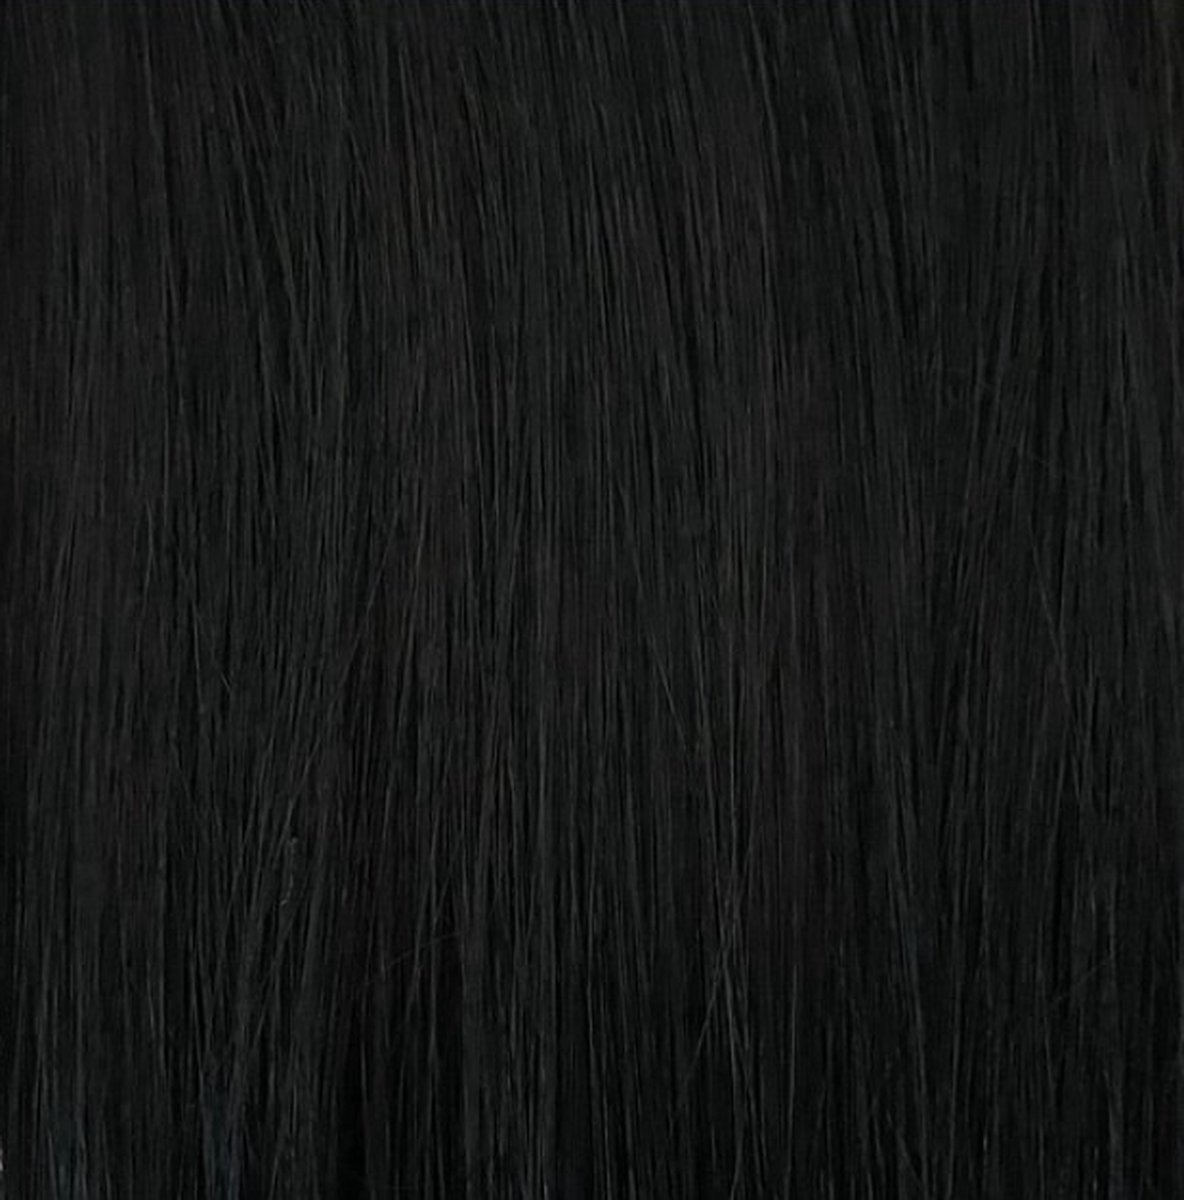 LUXEXTEND Weave Hair Extensions #1 | Human hair Zwart | Human Hair Weave | 40 cm - 100 gram | Remy Sorted & Double Drawn | Haarstuk | Extensions Haar | Extensions Human Hair | Echt Haar | Weave Hairextensions Bundels | Weft Haar | Haarverlenging